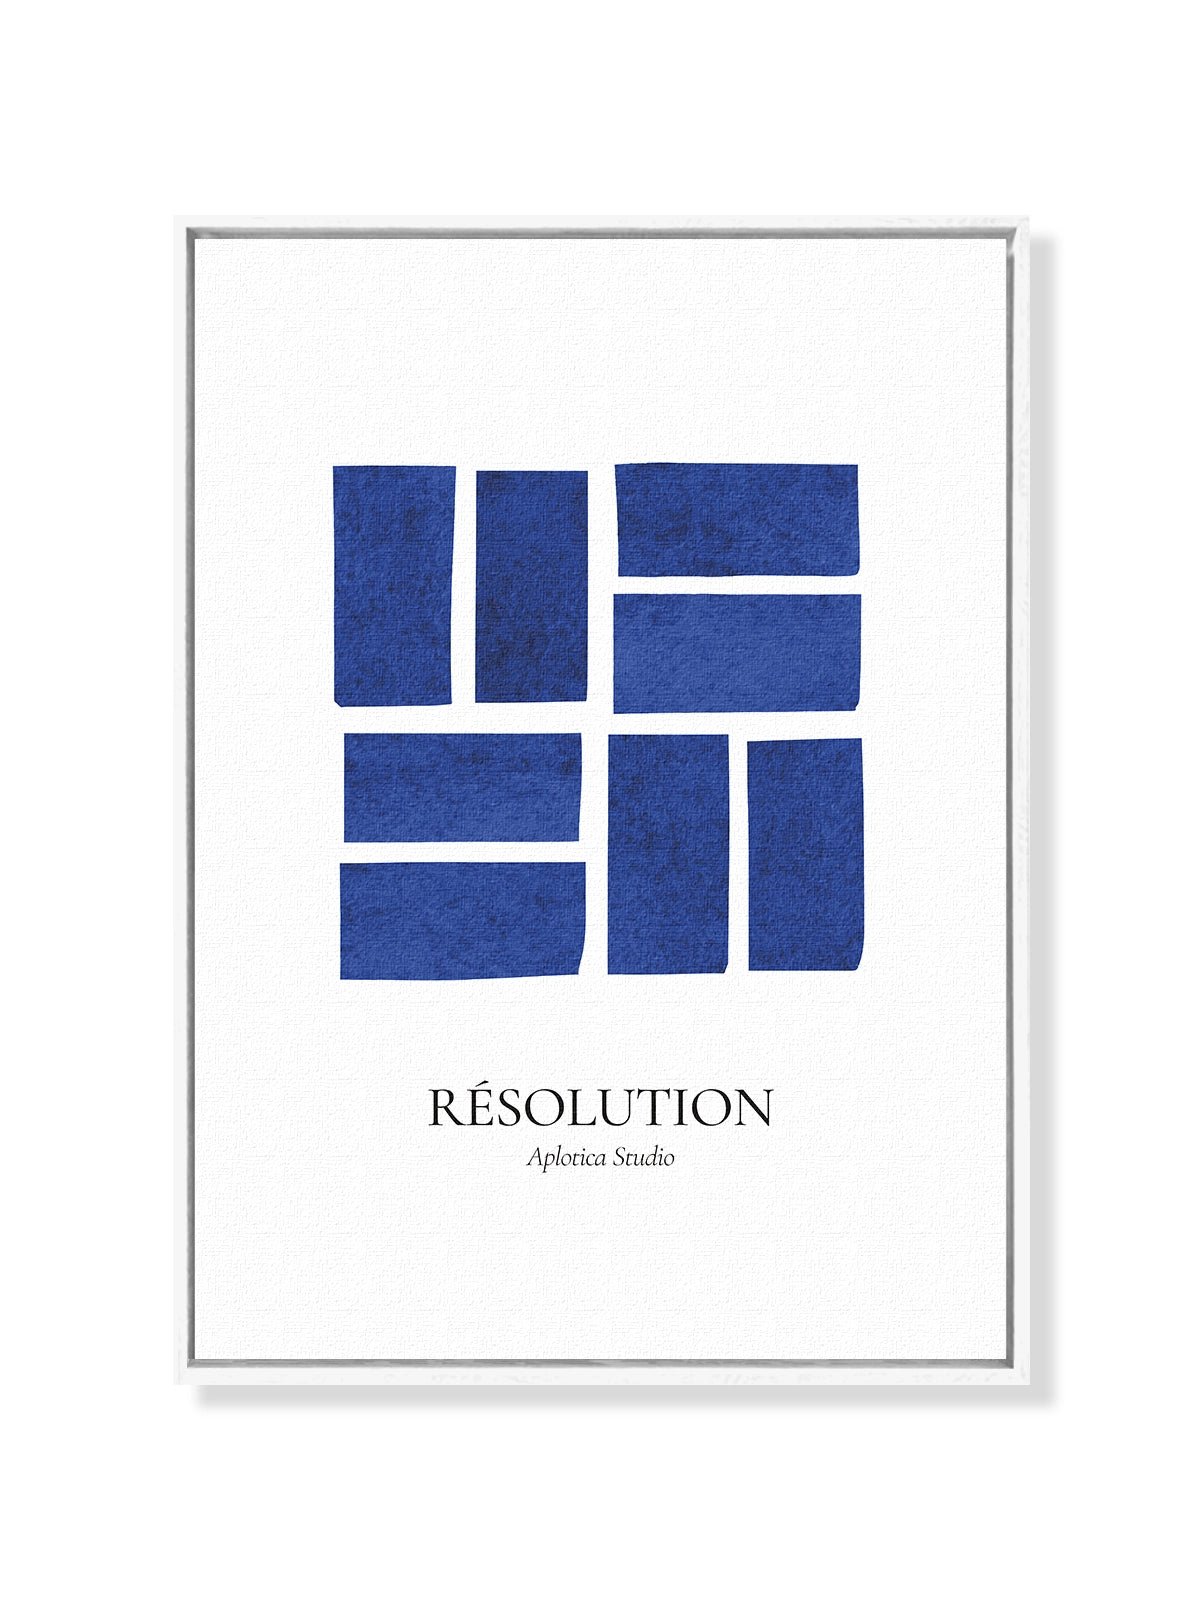 Résolution - Una Lámina de Aplotica Studio - Decora tu casa en Nomadart